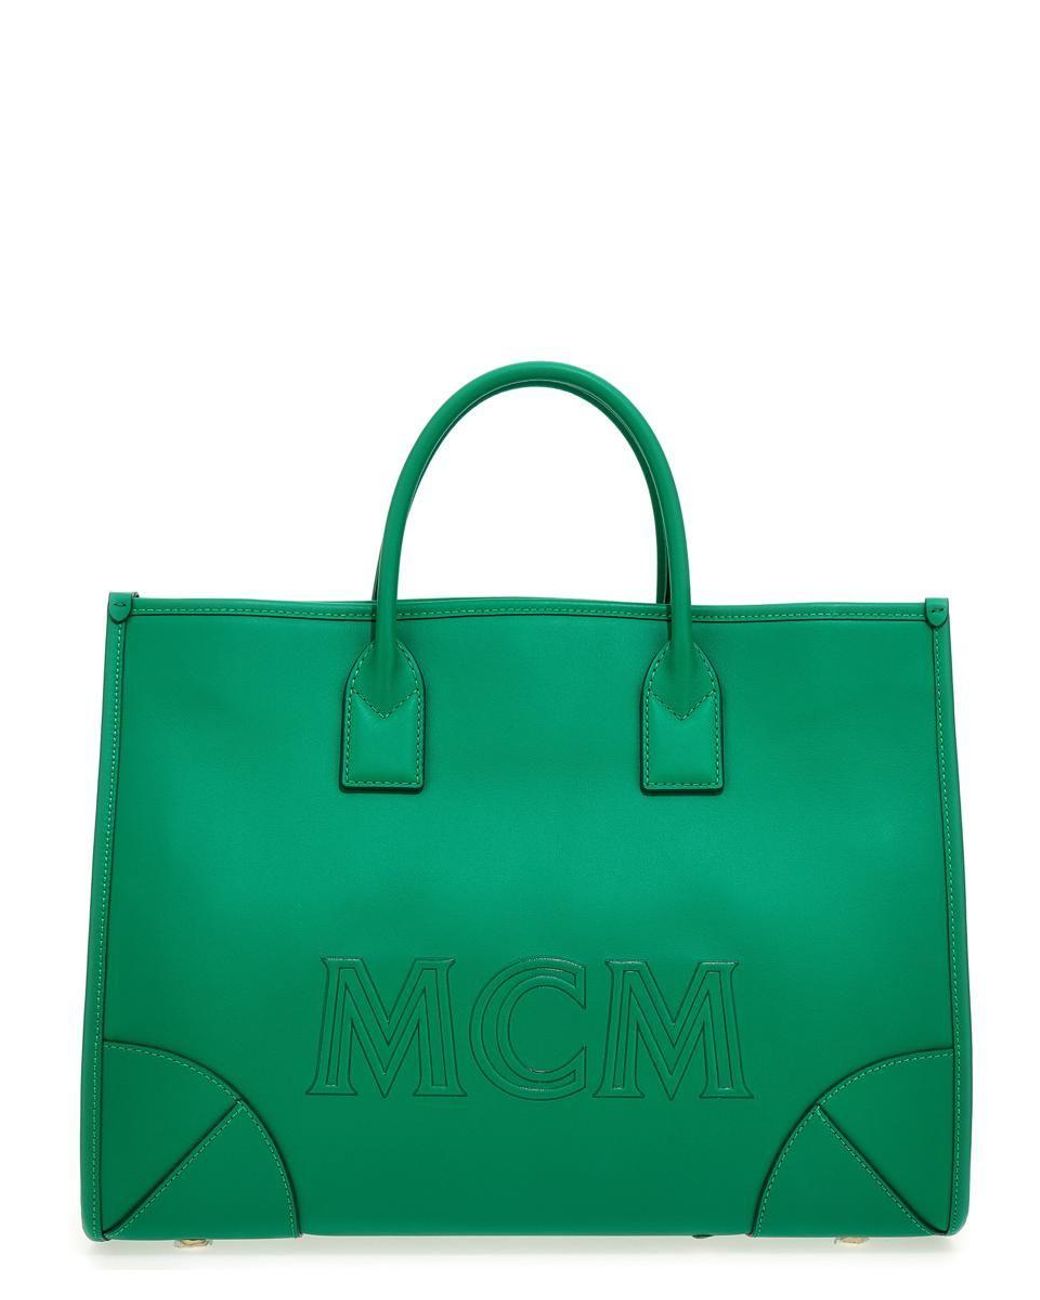 Mcm Munchen XL Monogram Tote Bag Cognac